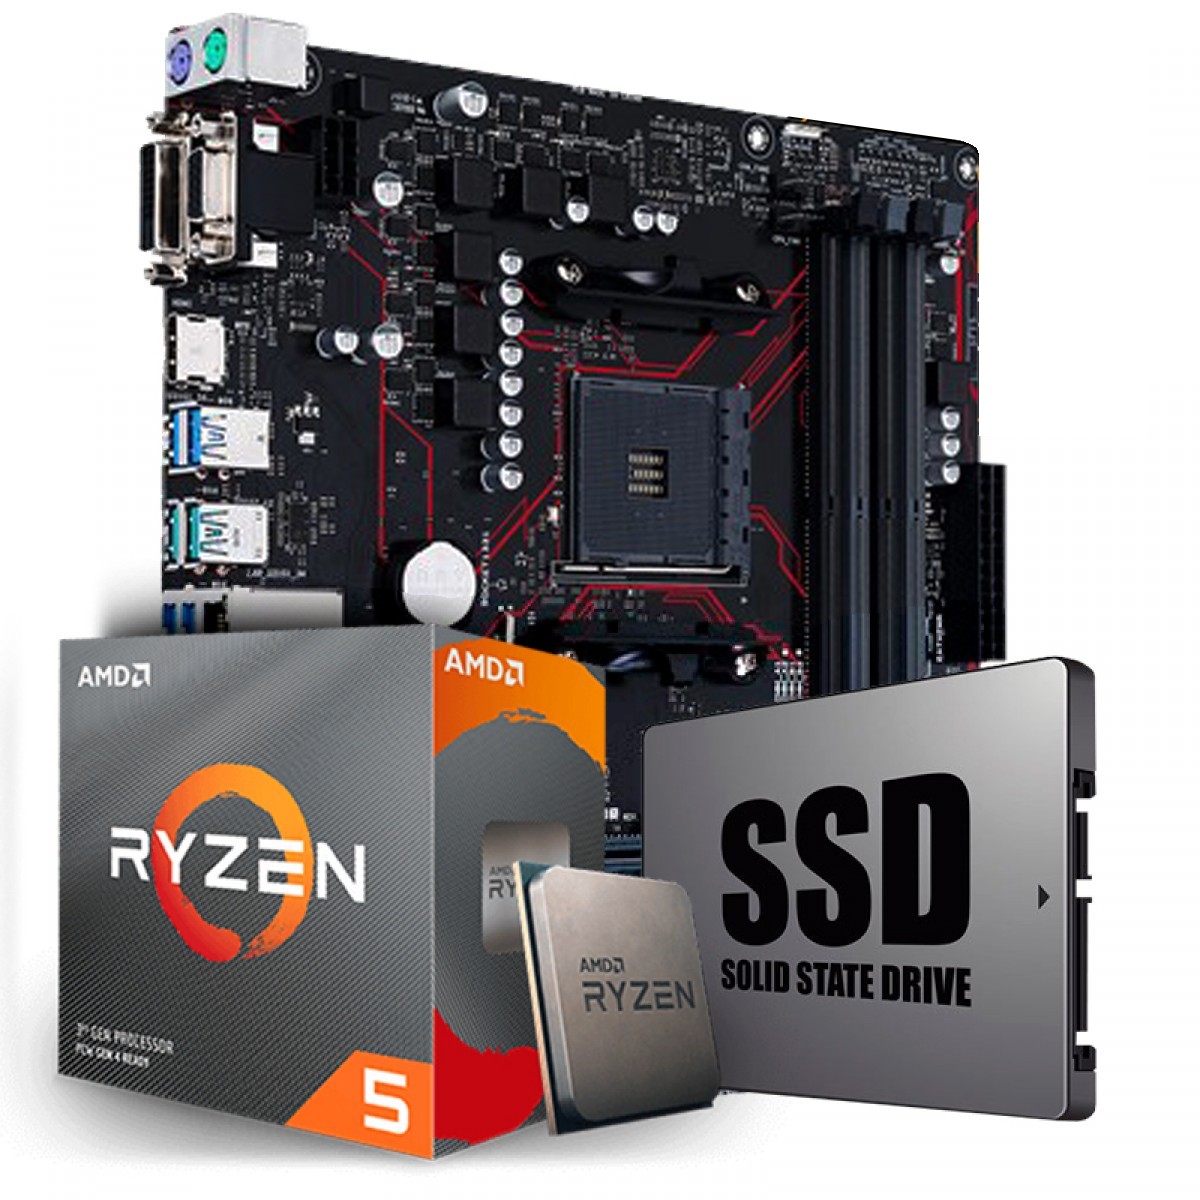 Kit Upgrade, AMD Ryzen 5 3600XT, Asus Prime B450M Gaming/BR, SSD 120GB